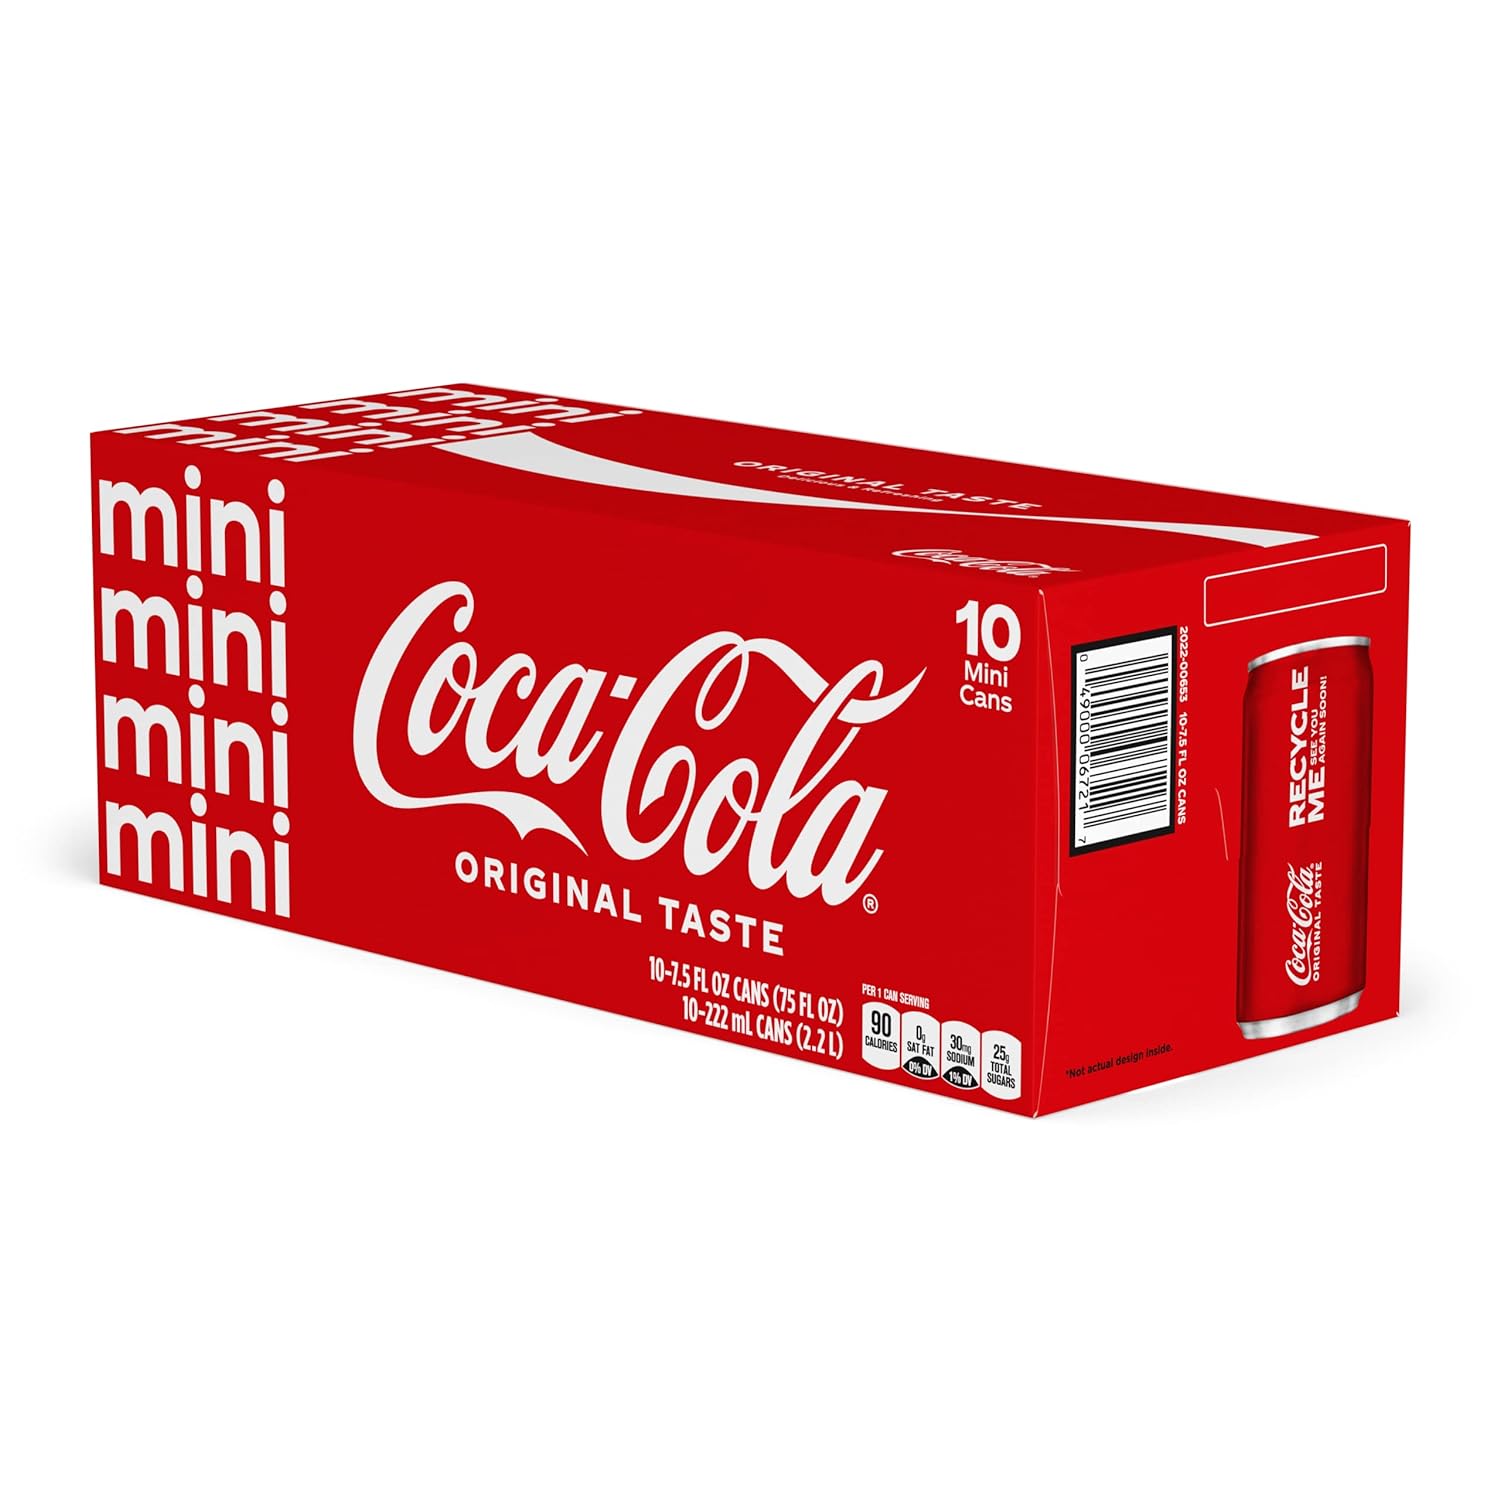 Coca-Cola Soda Soft Drink, 7.5 fl Oz (10 count)